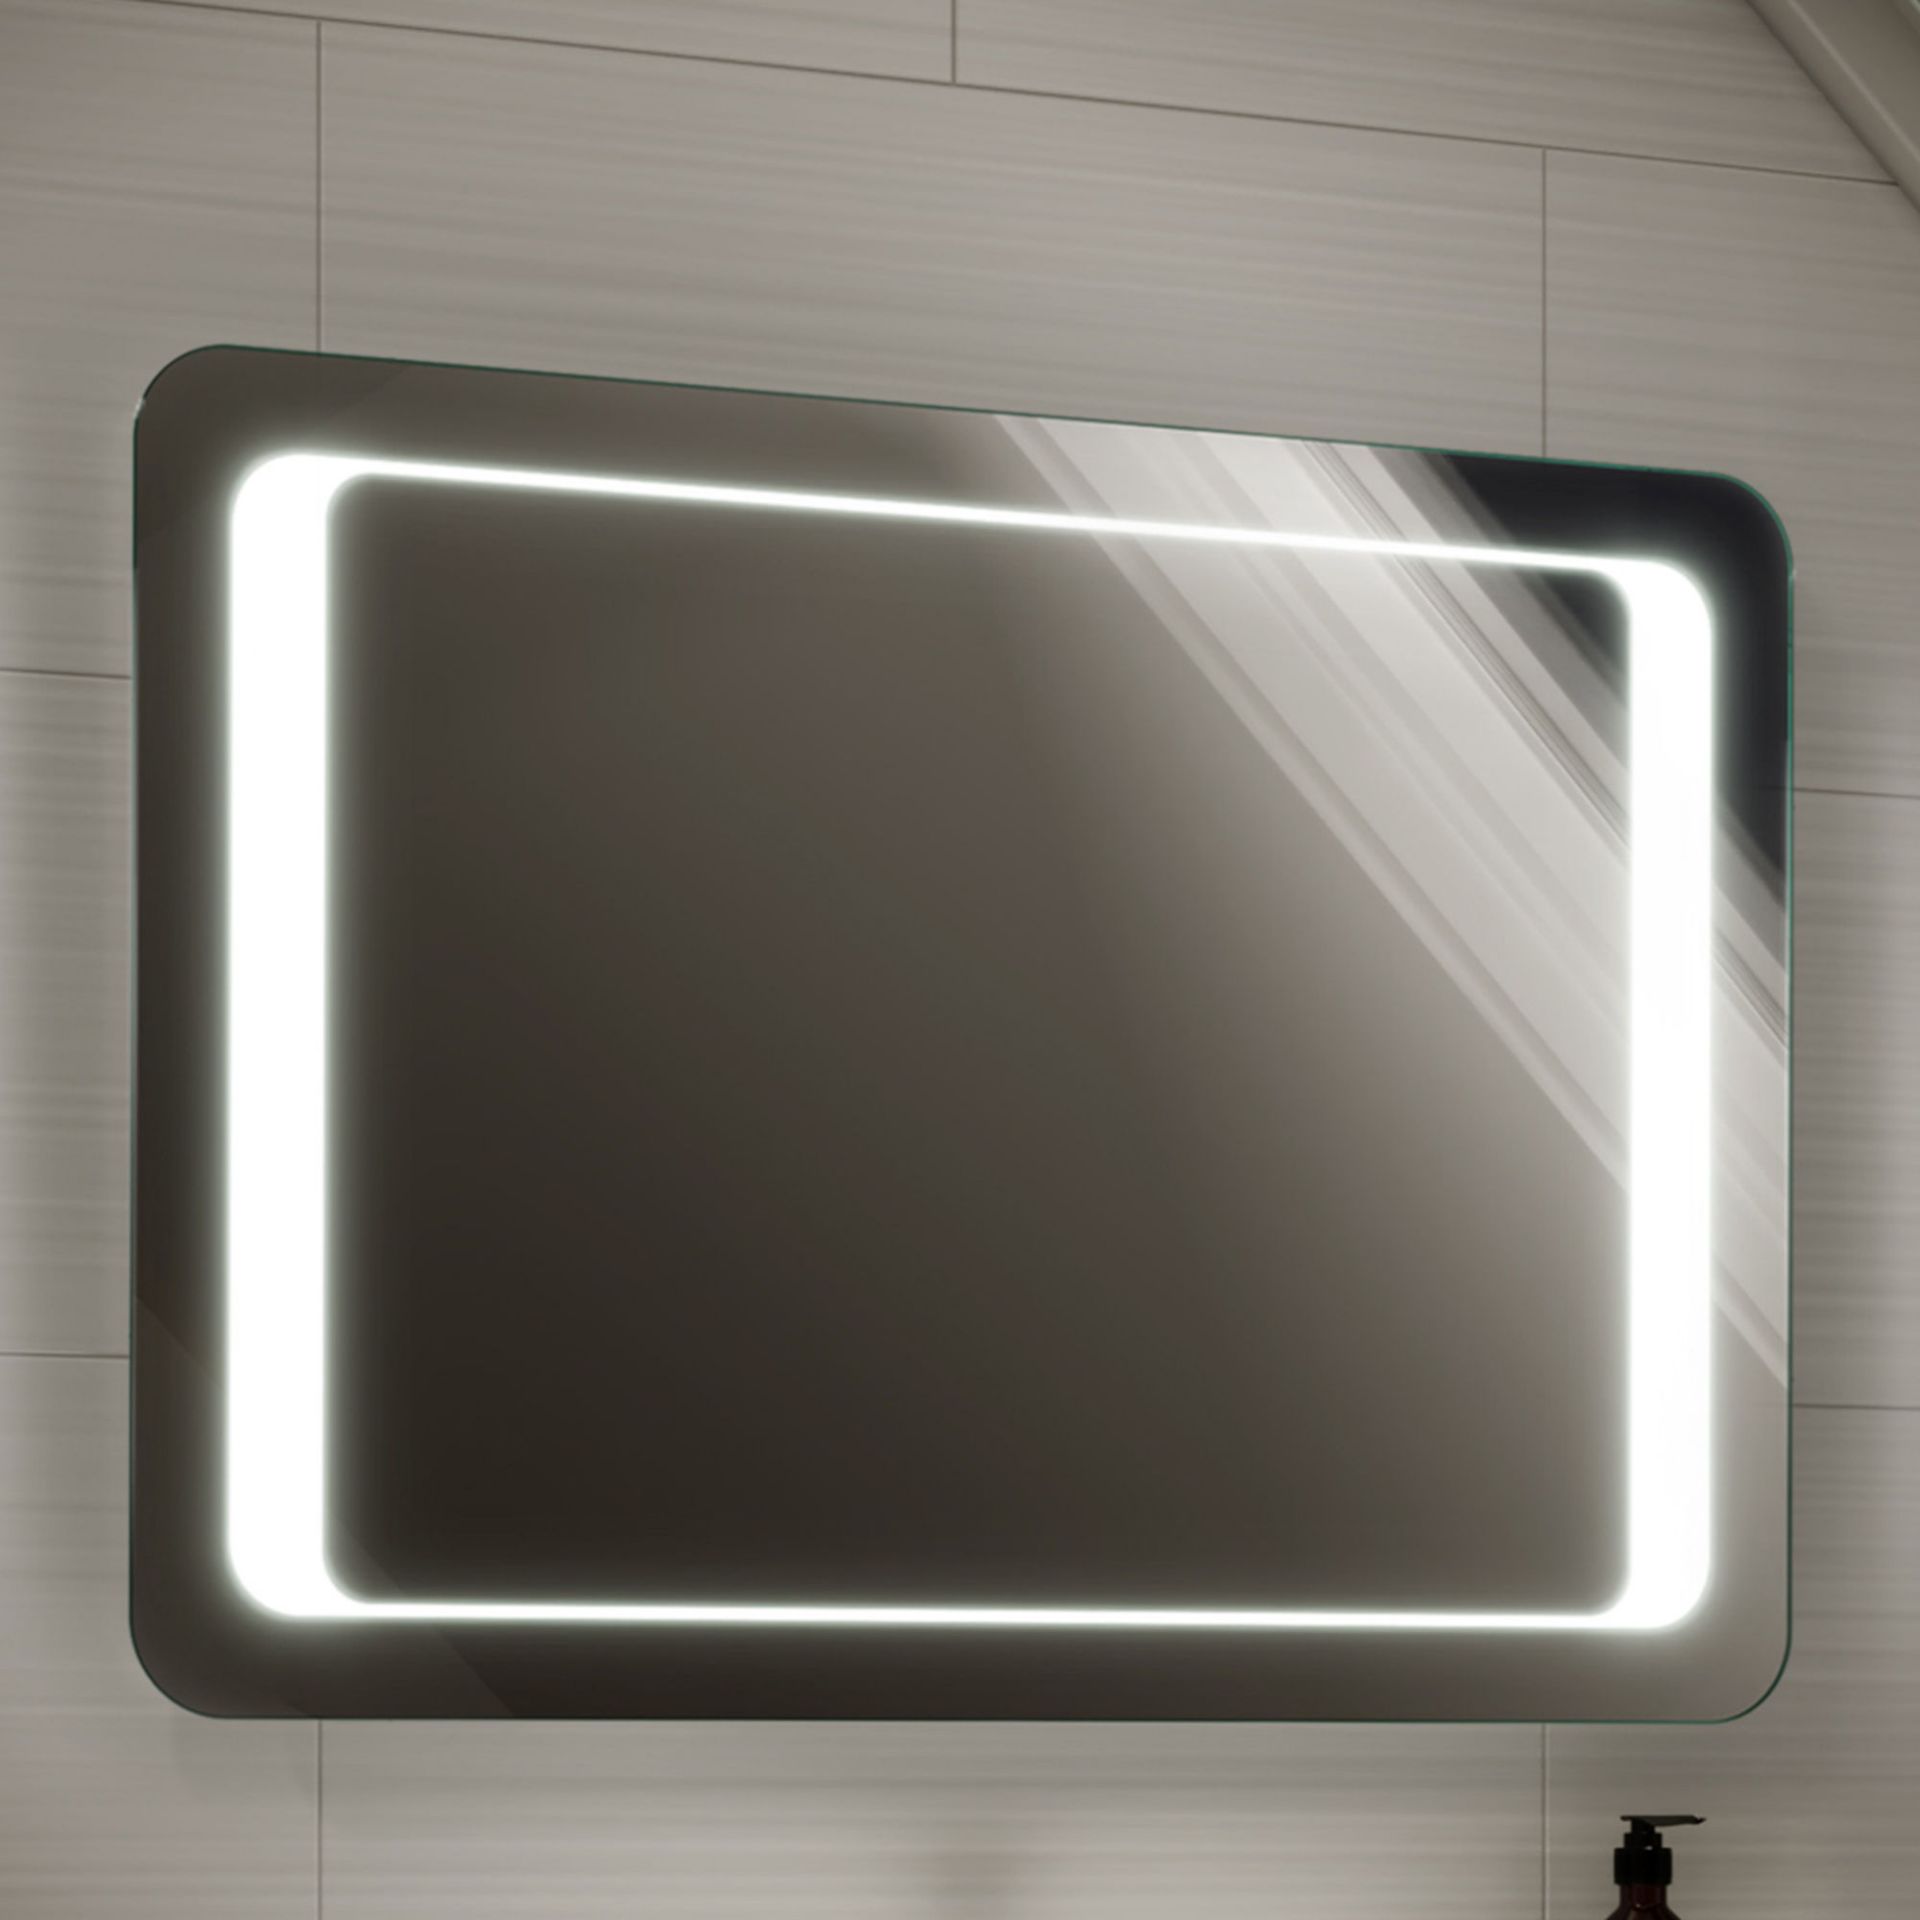 (DK22) 800x600mm Quasar Illuminated LED Mirror. RRP £349.99. Energy efficient LED lighting with IP44